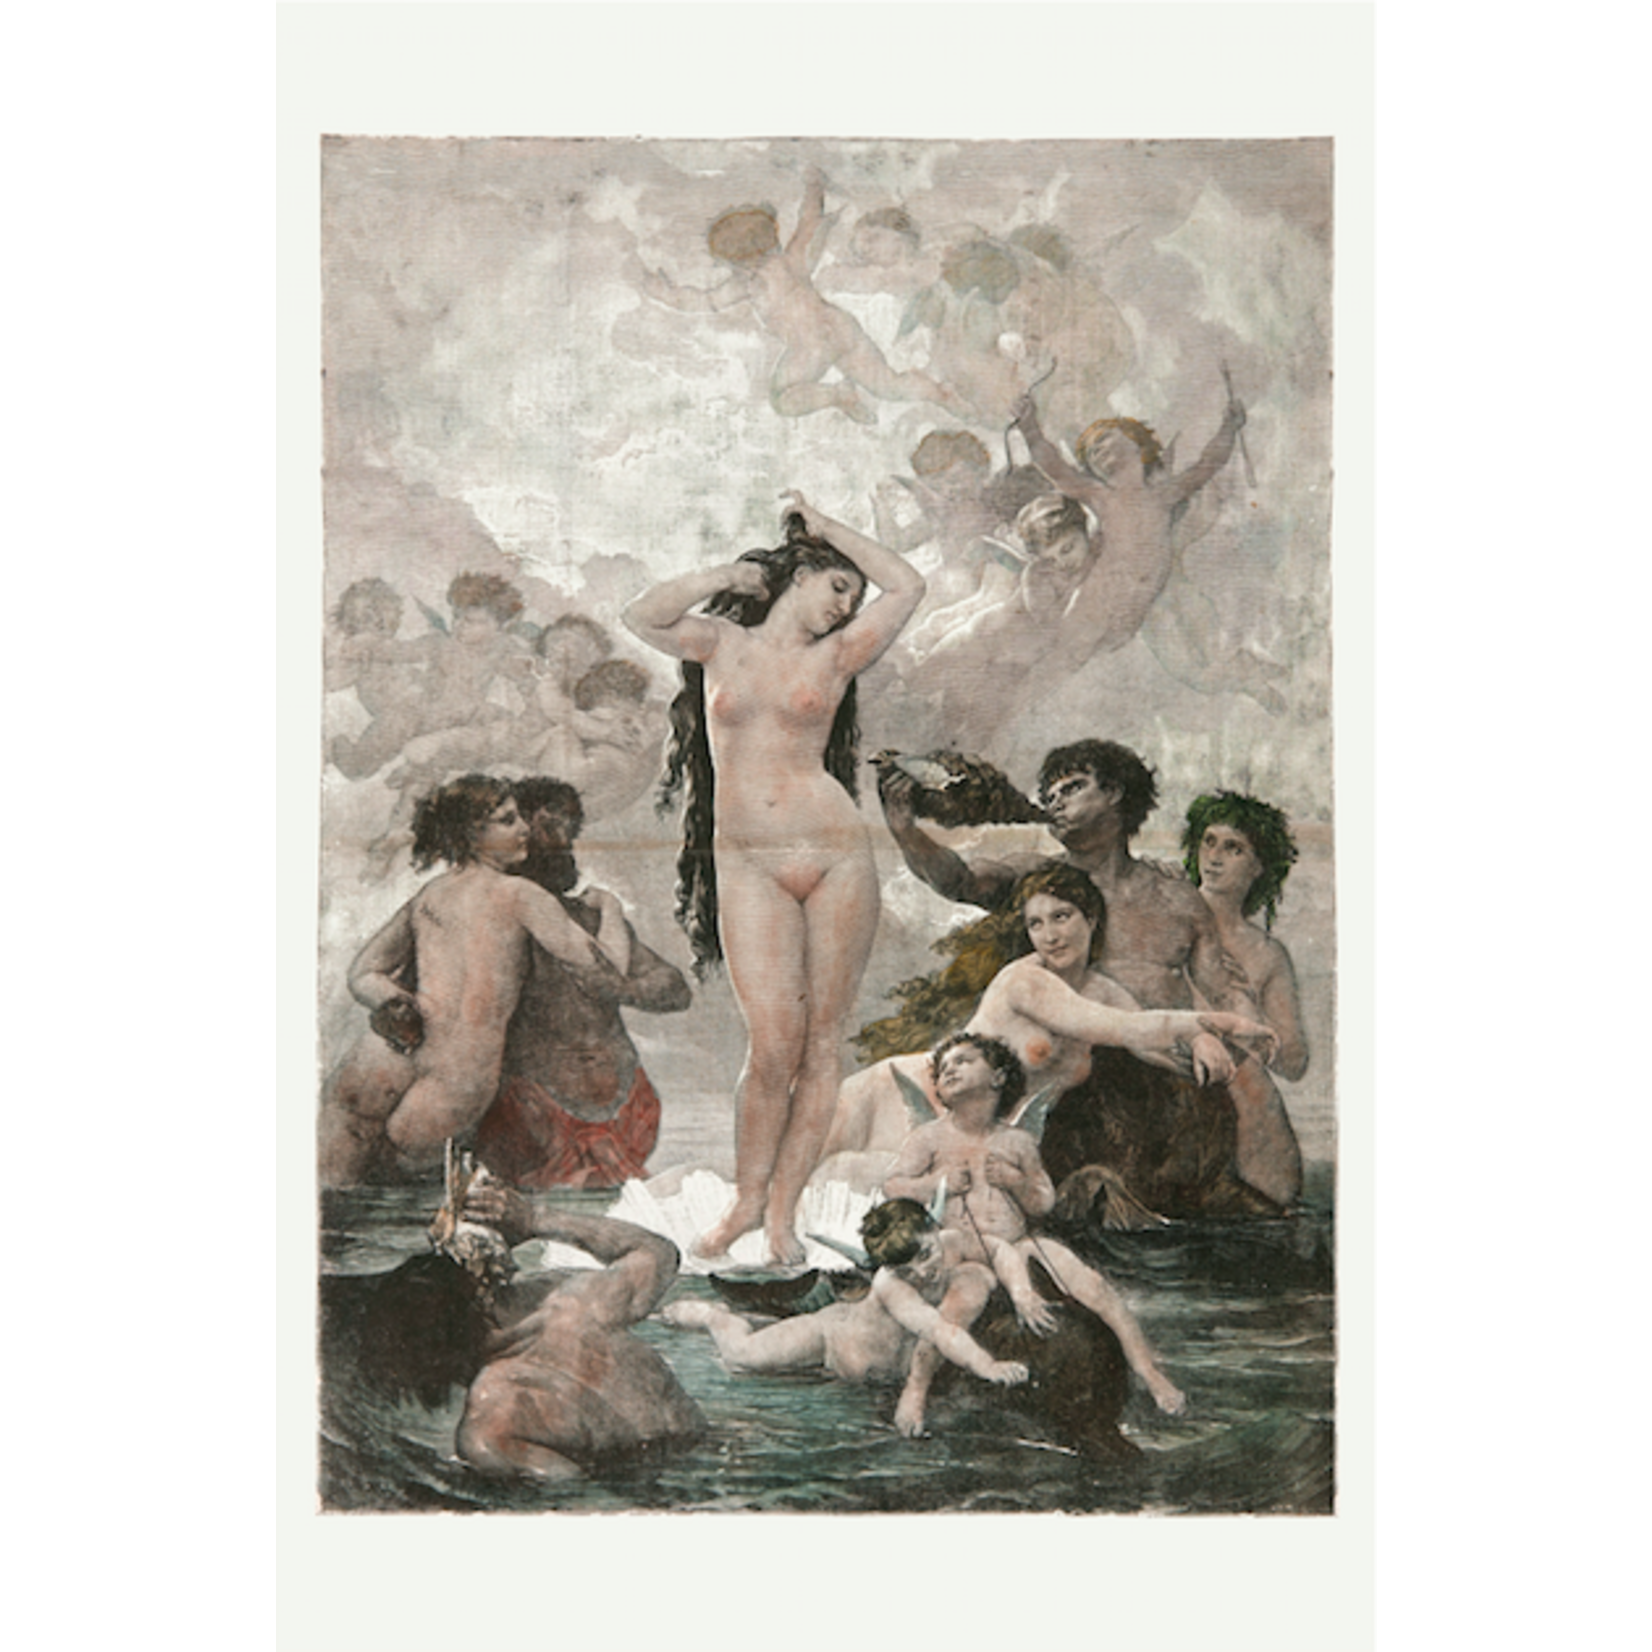 Framed Print on Rag Paper: The Birth of Venus, XIX Century Illustration